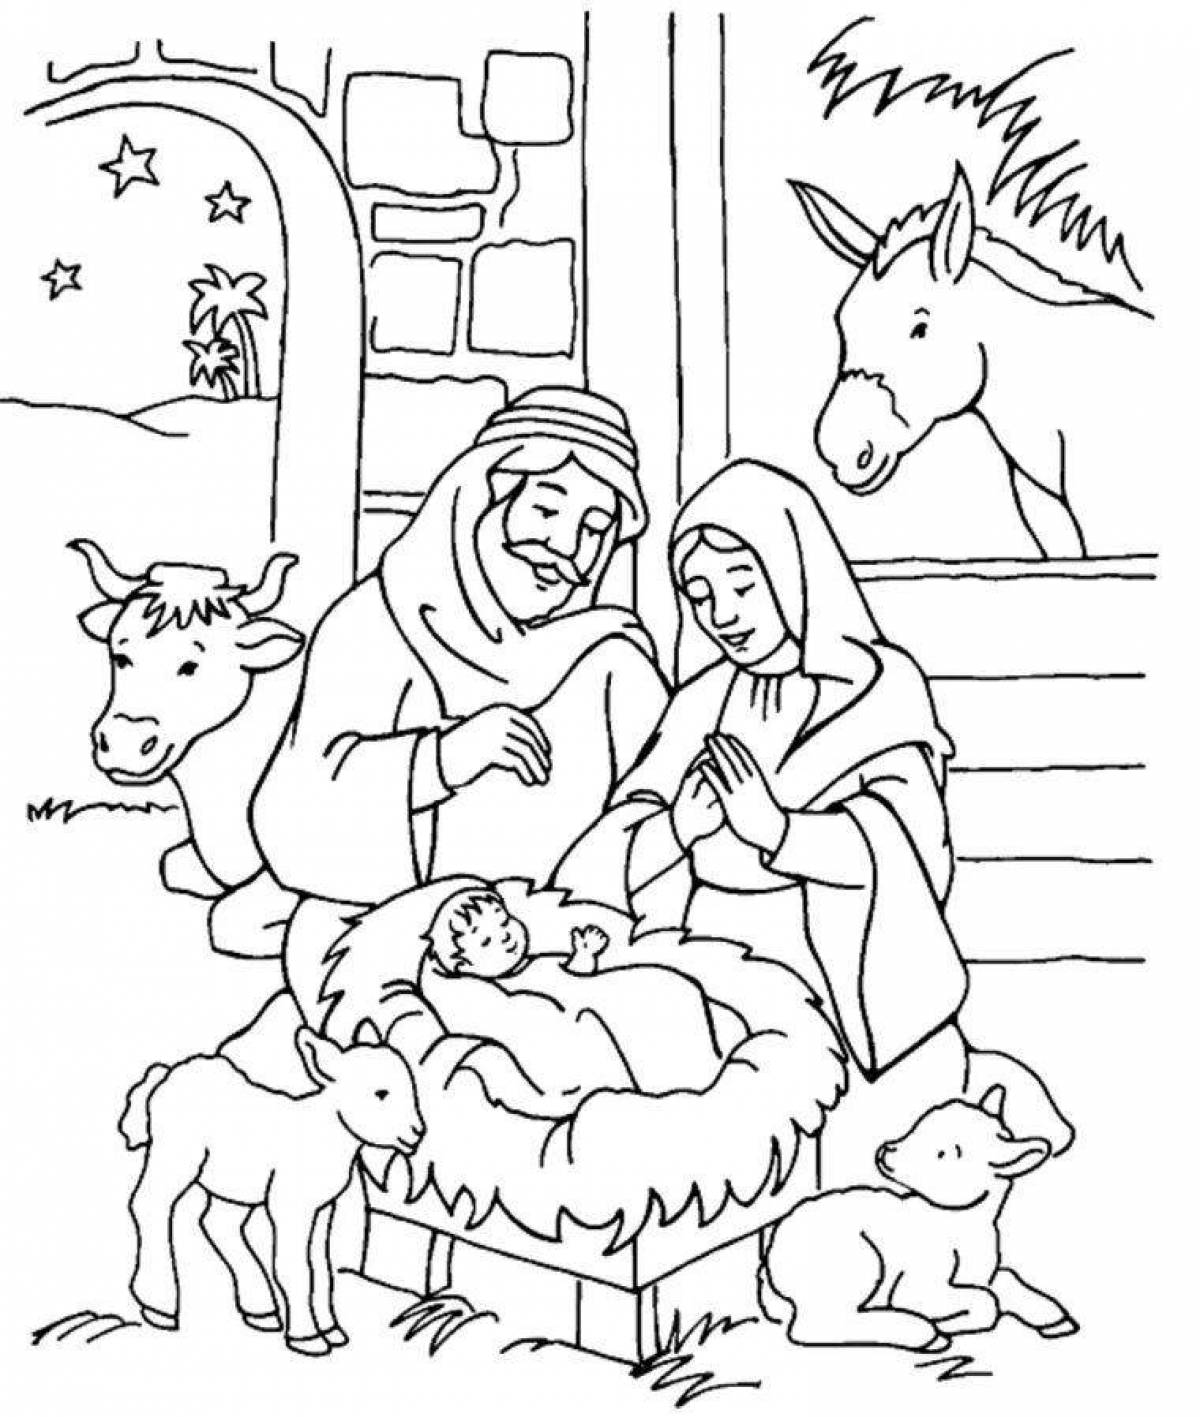 Nativity scene inspirational coloring book for kids